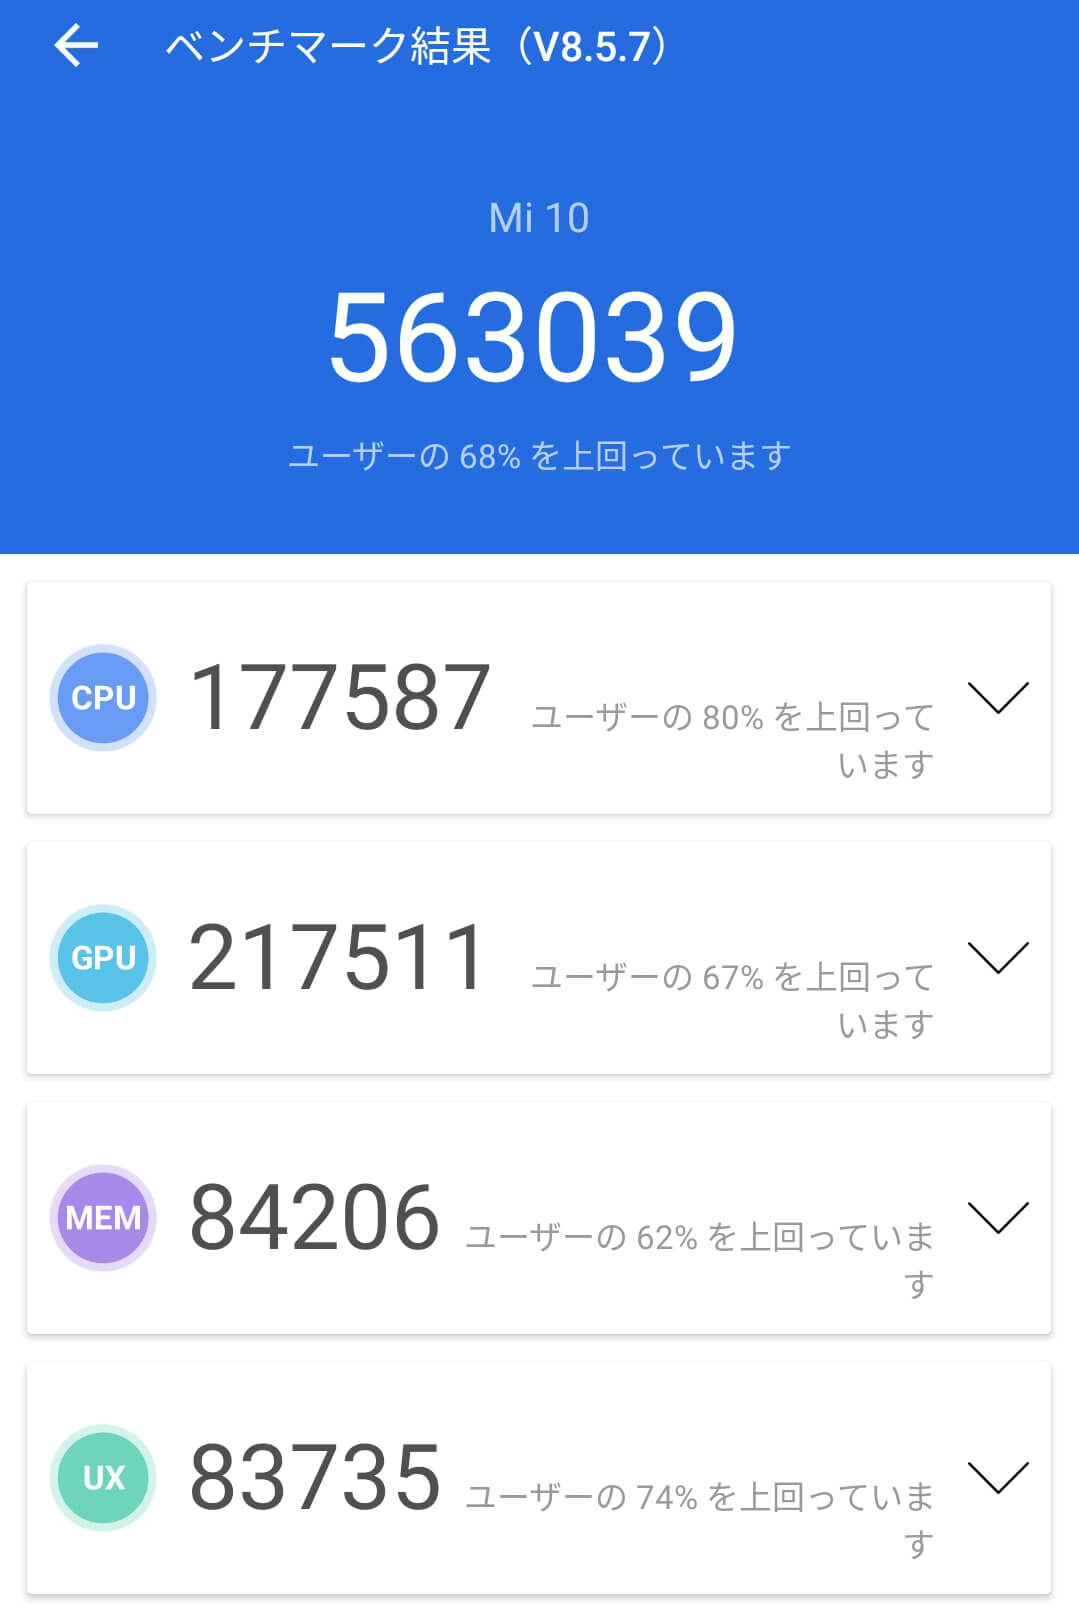 Xiaomi Mi 10のAntutuベンチマークスコア計測1回目は563039